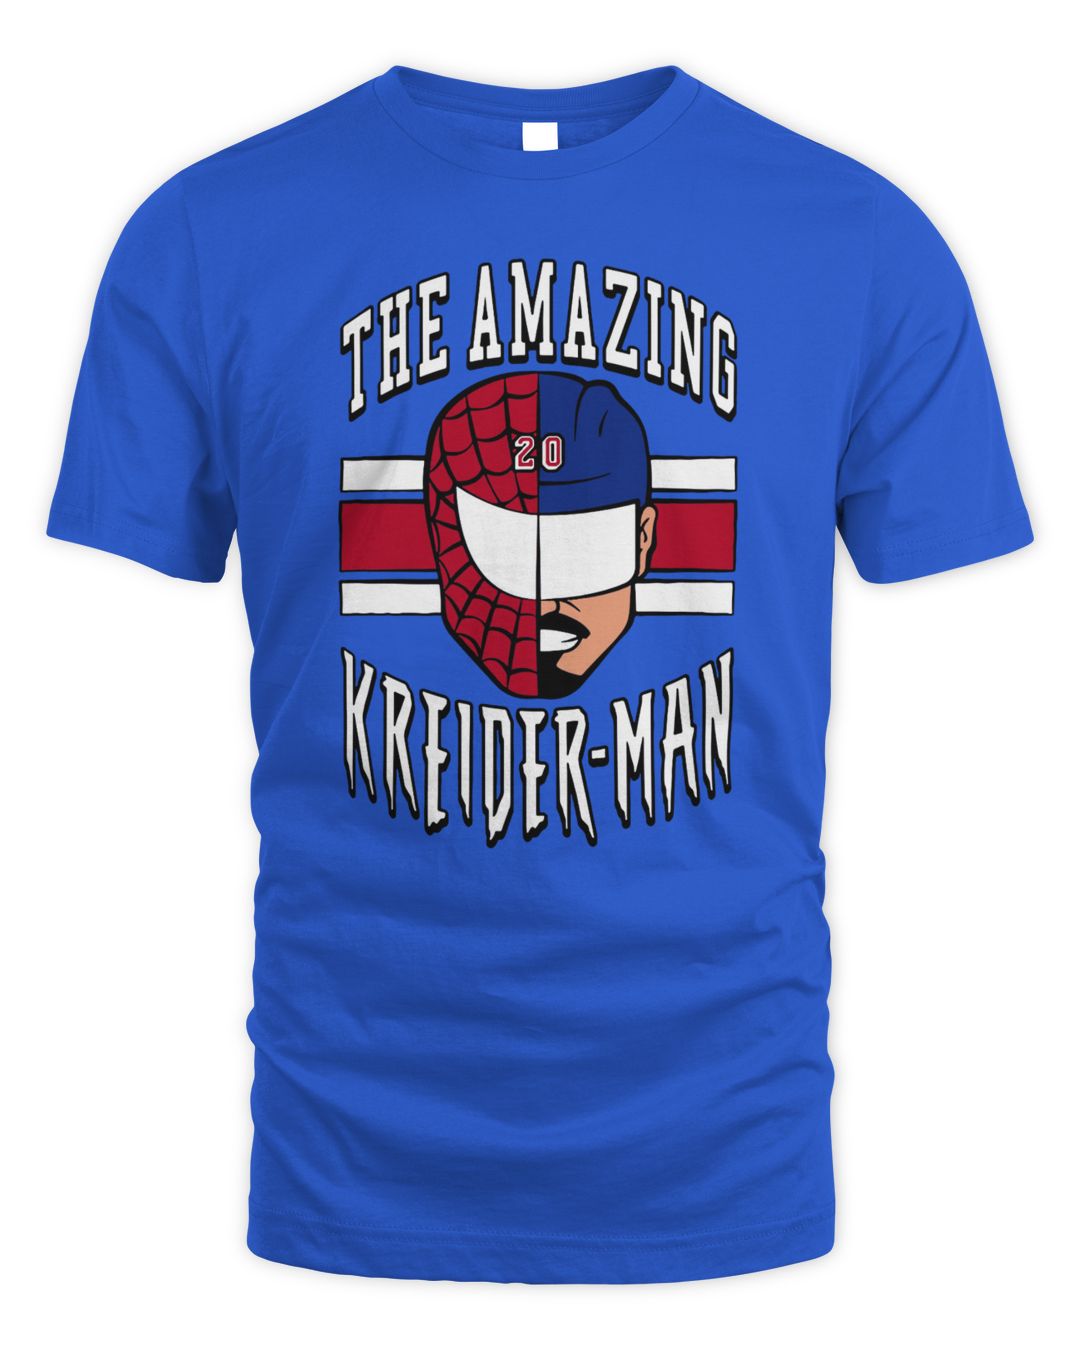 Blue York Merch Amazing Kreiderman Shirt